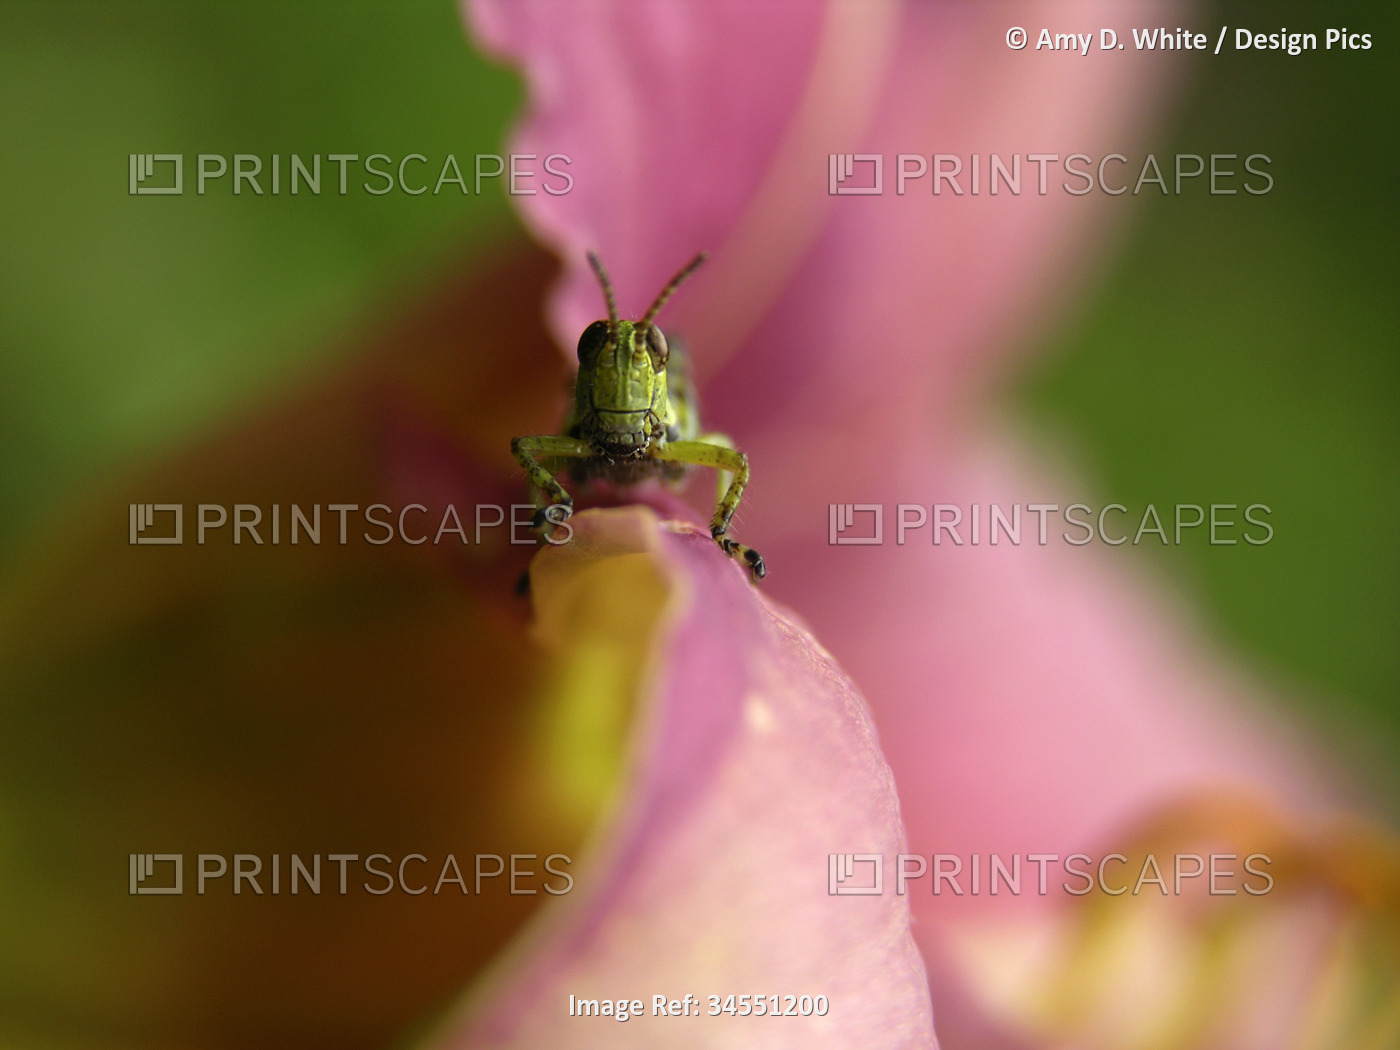 Grasshopper on a Day lily blossom